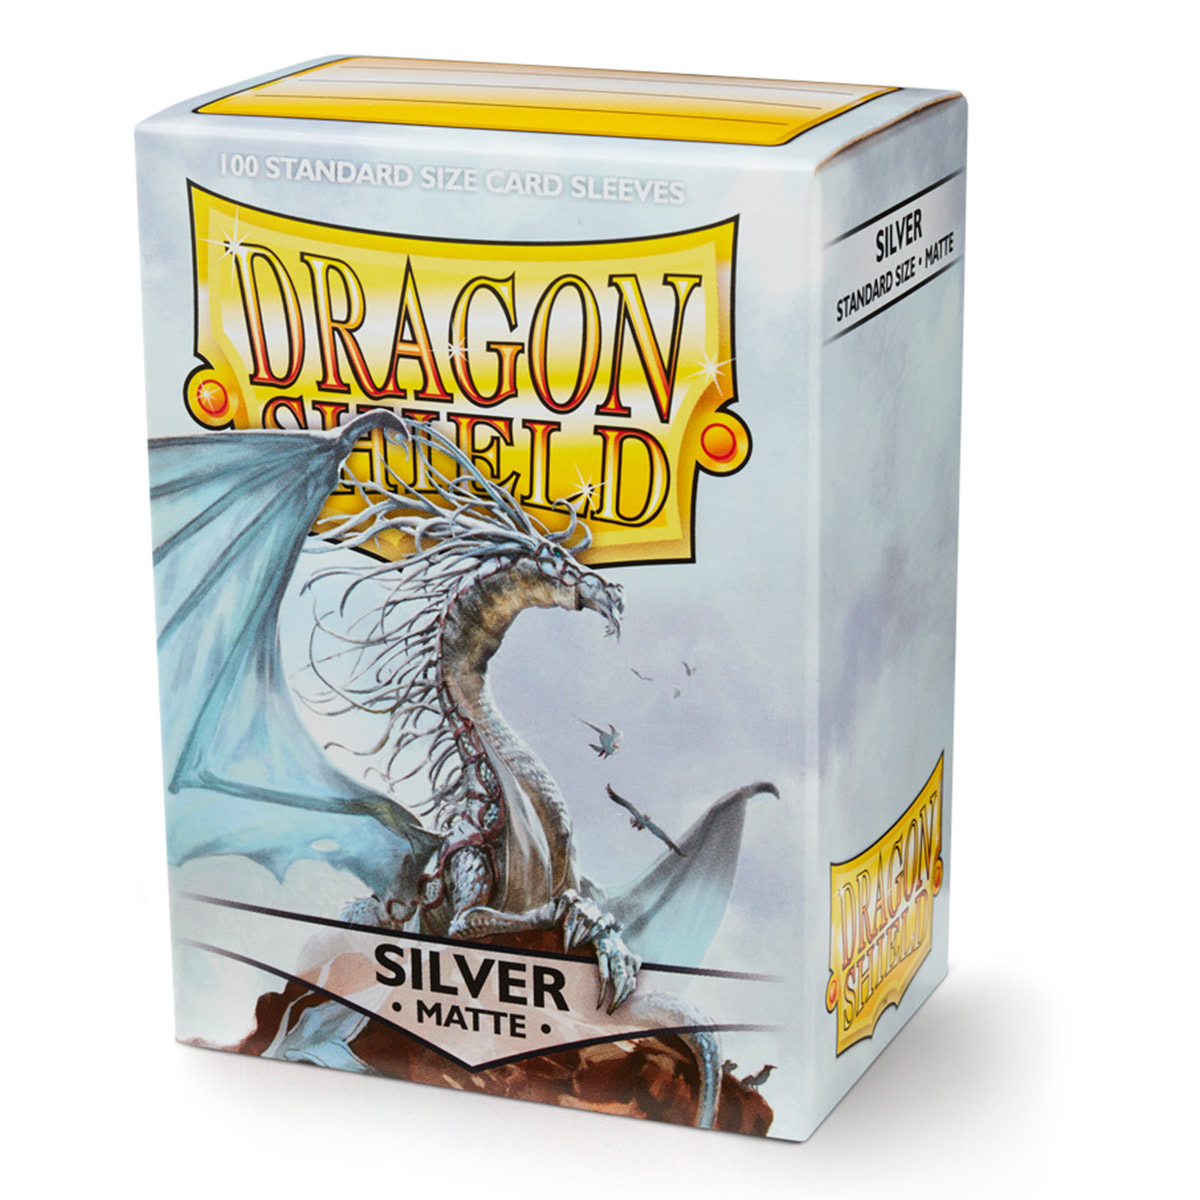 Dragon Shield Standard Size Card matte Sleeves yellow Magic Pokemon 100ct box